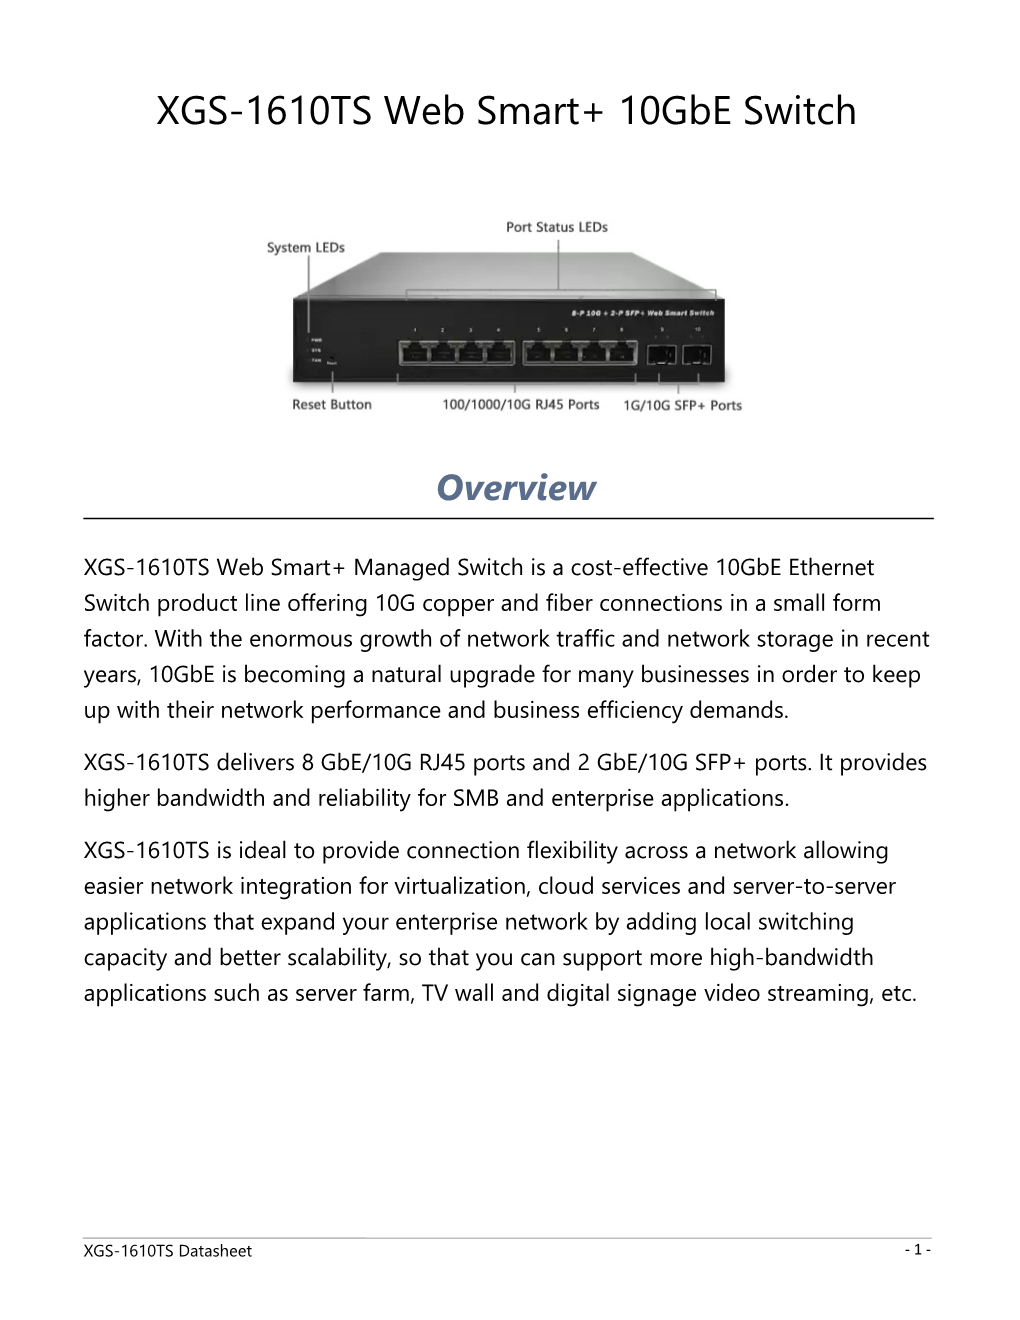 XGS-1610TS Web Smart+ 10Gbe Switch